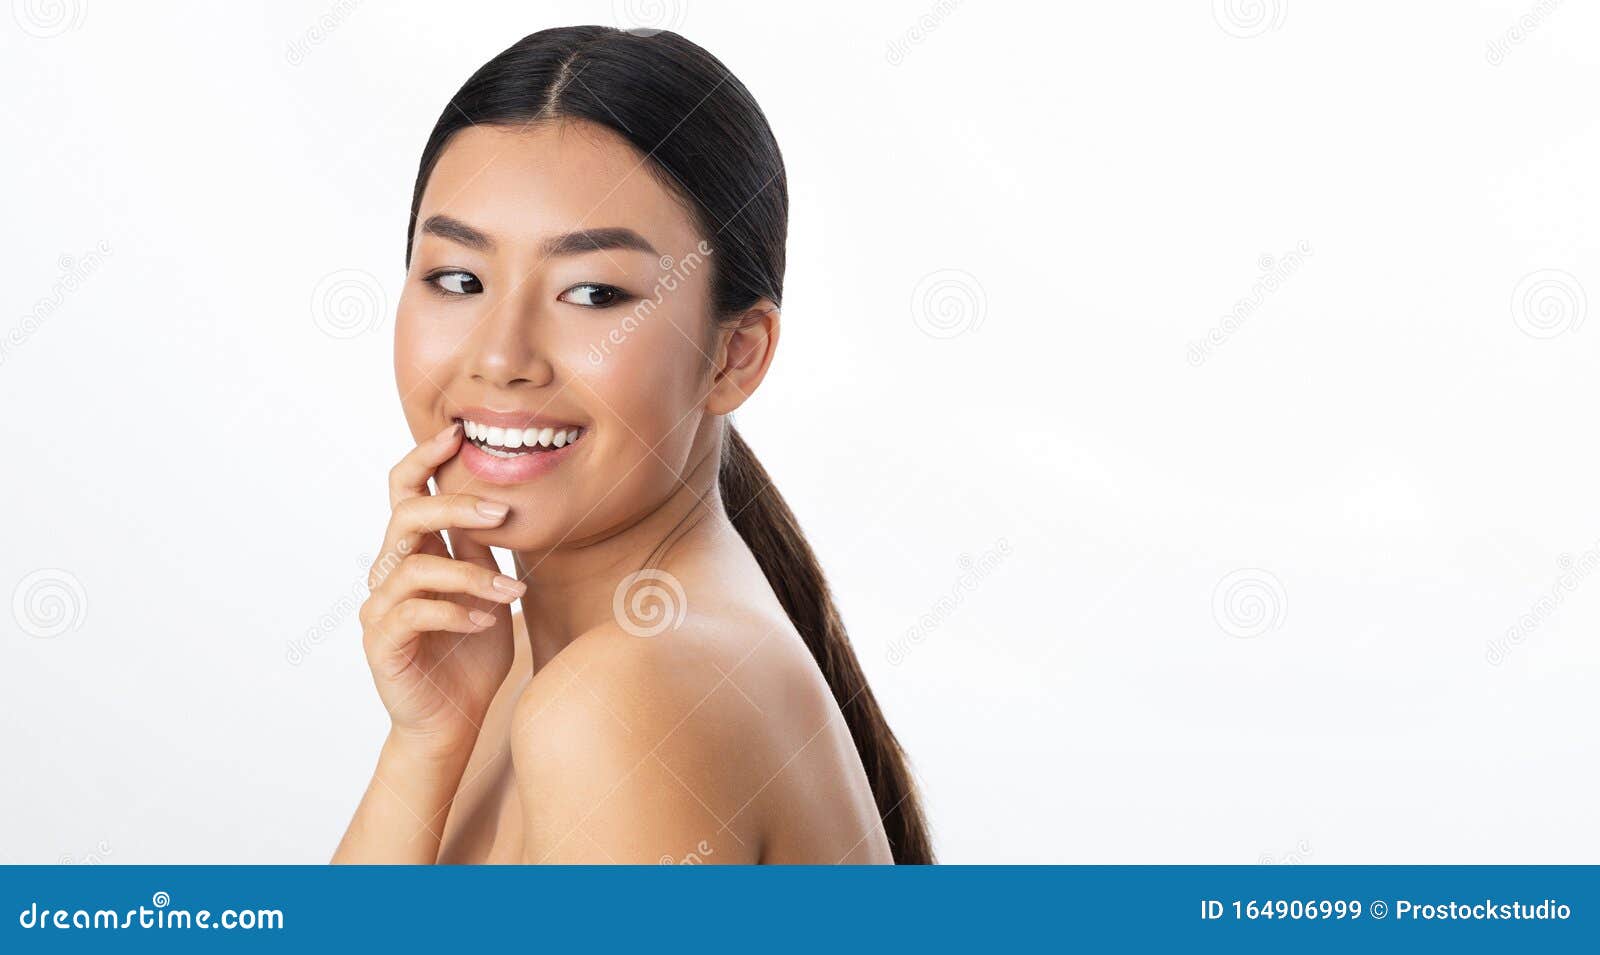 Naked Beauty Beautiful Asian Girl Smiling Over White Background Stock Image Image Of Portrait